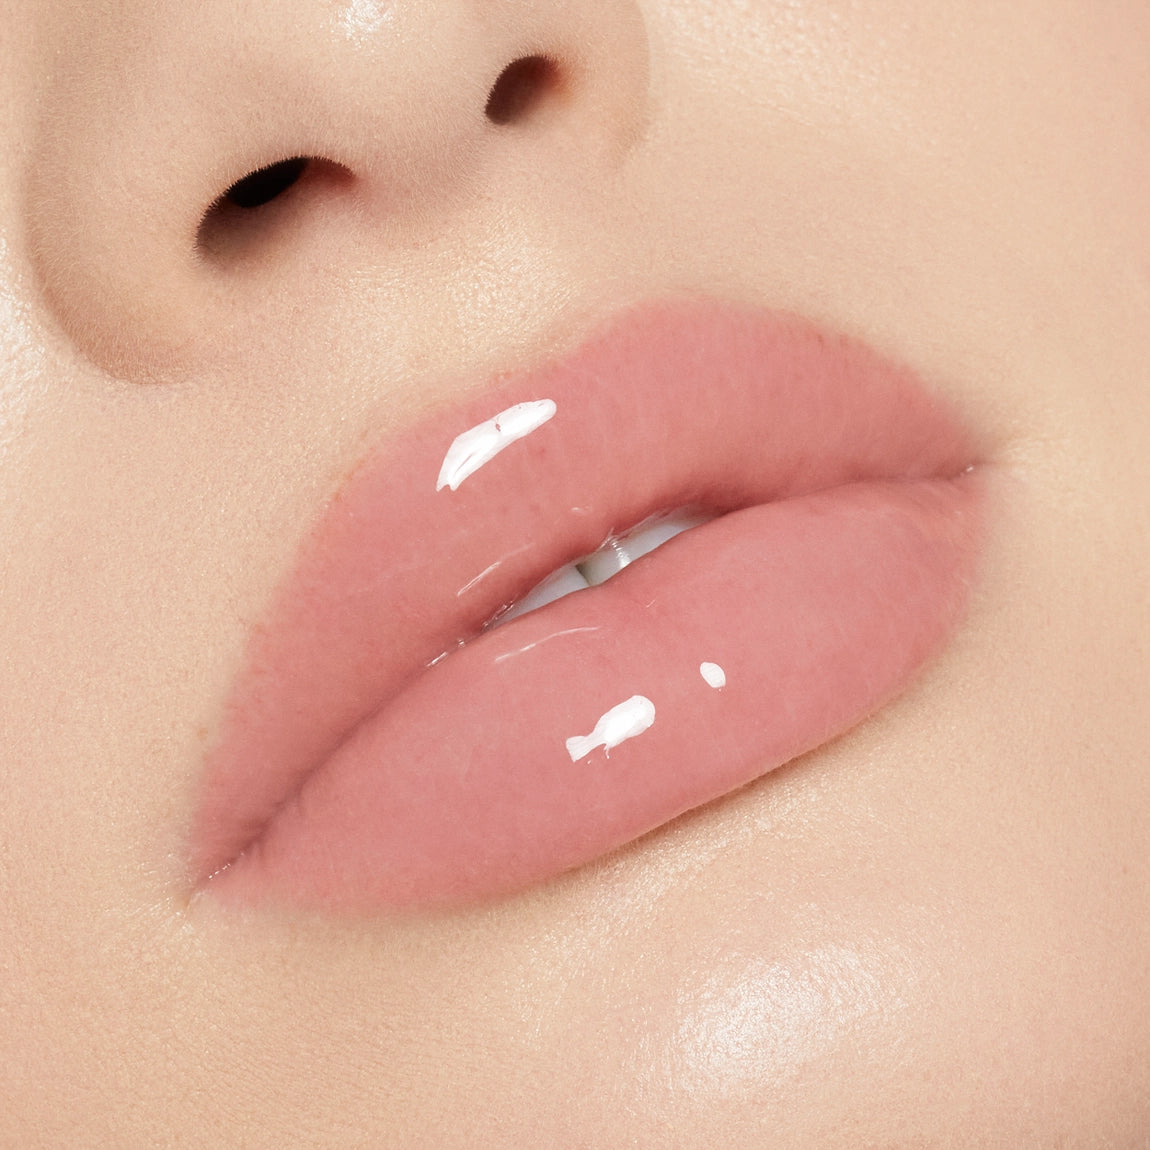 Kylie Jenner Drops Lips Slides